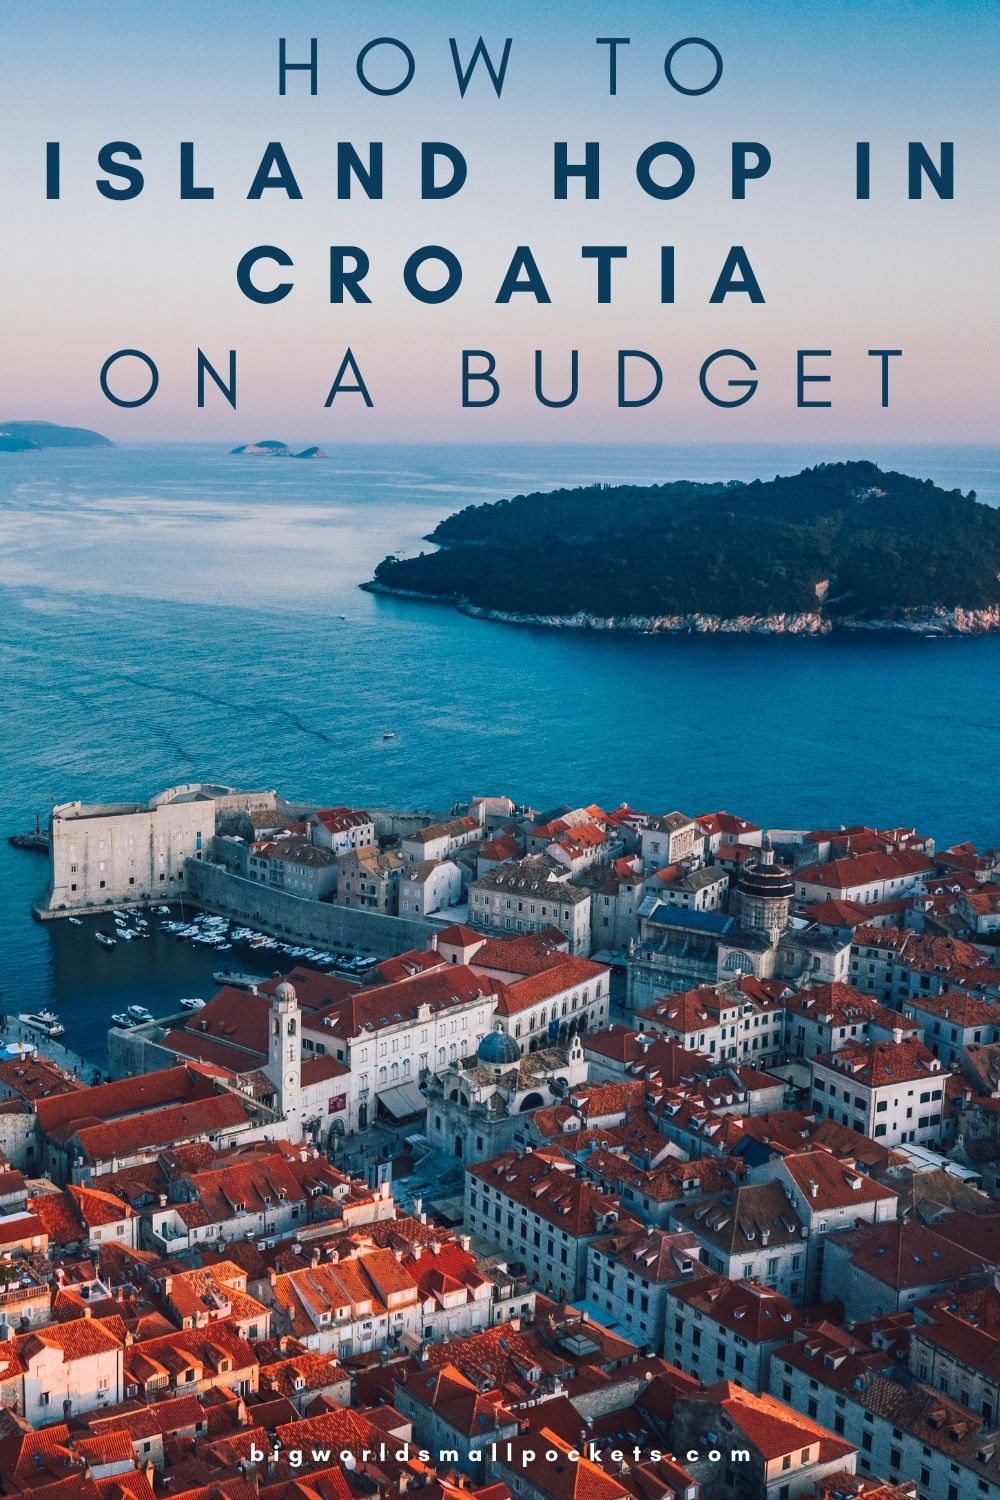 How to Island Hop in Croatia on a Budget